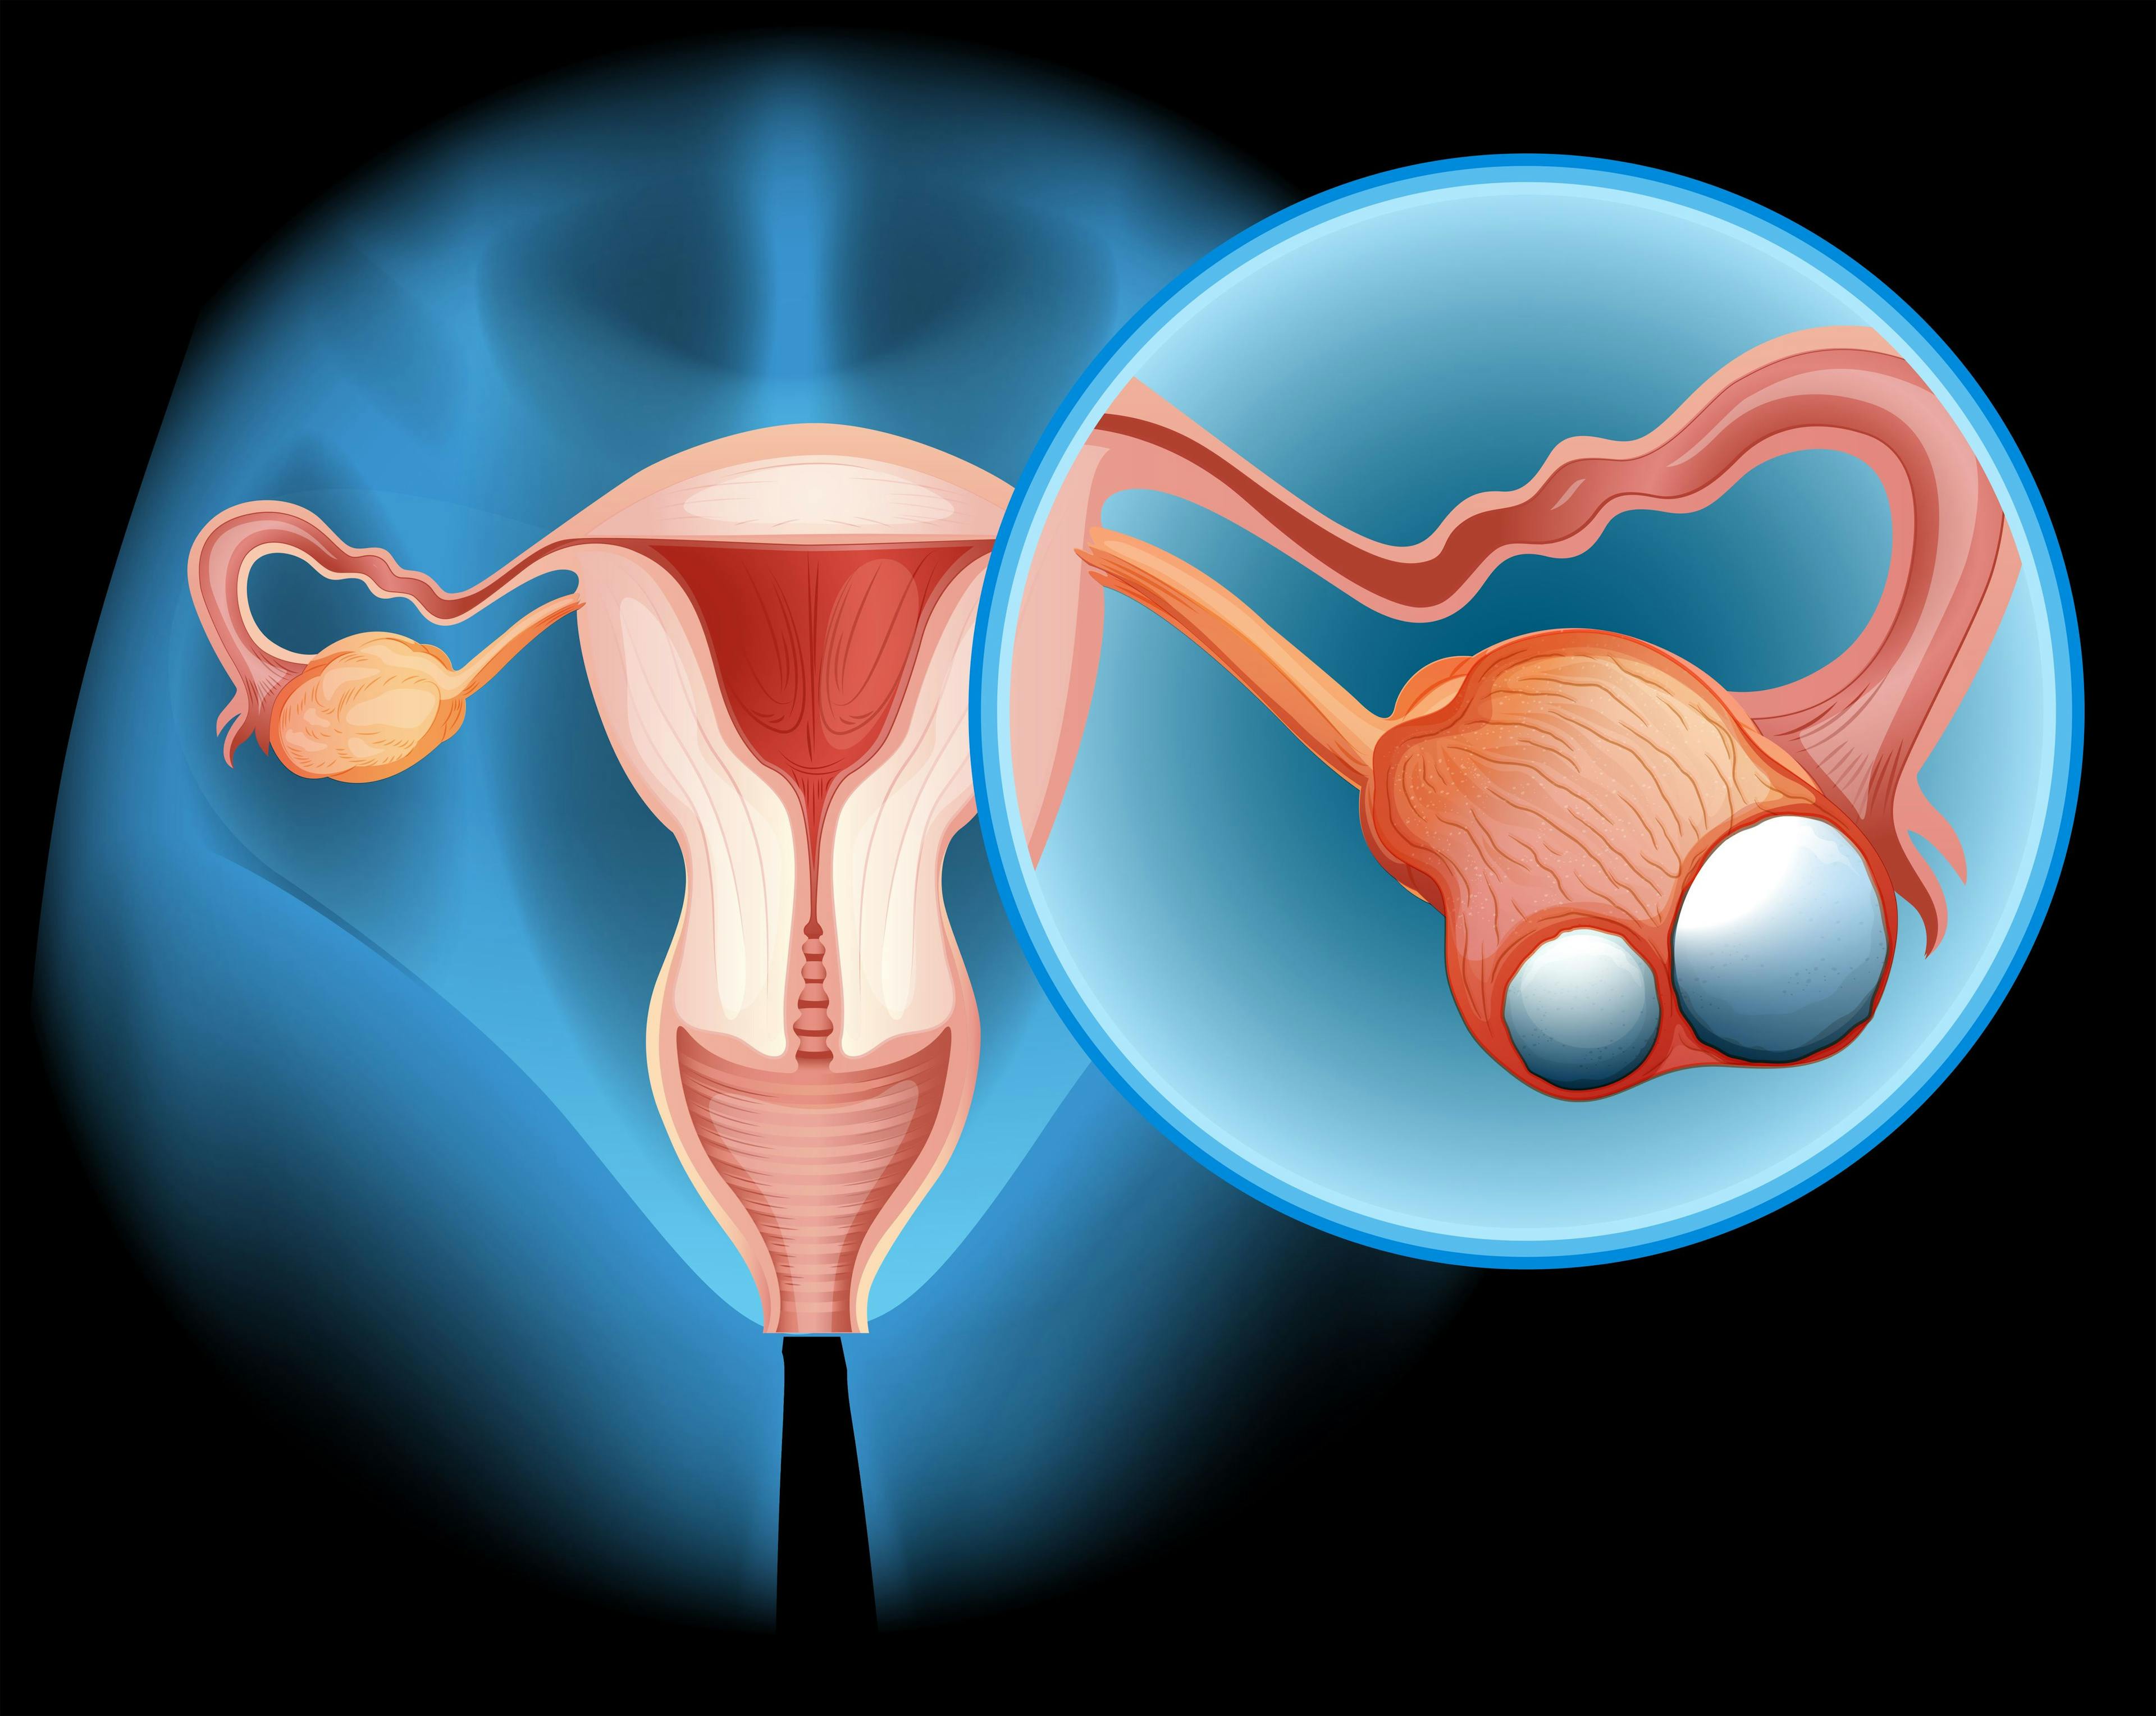 Illustration of ovarian cancer - stock.adobe.com